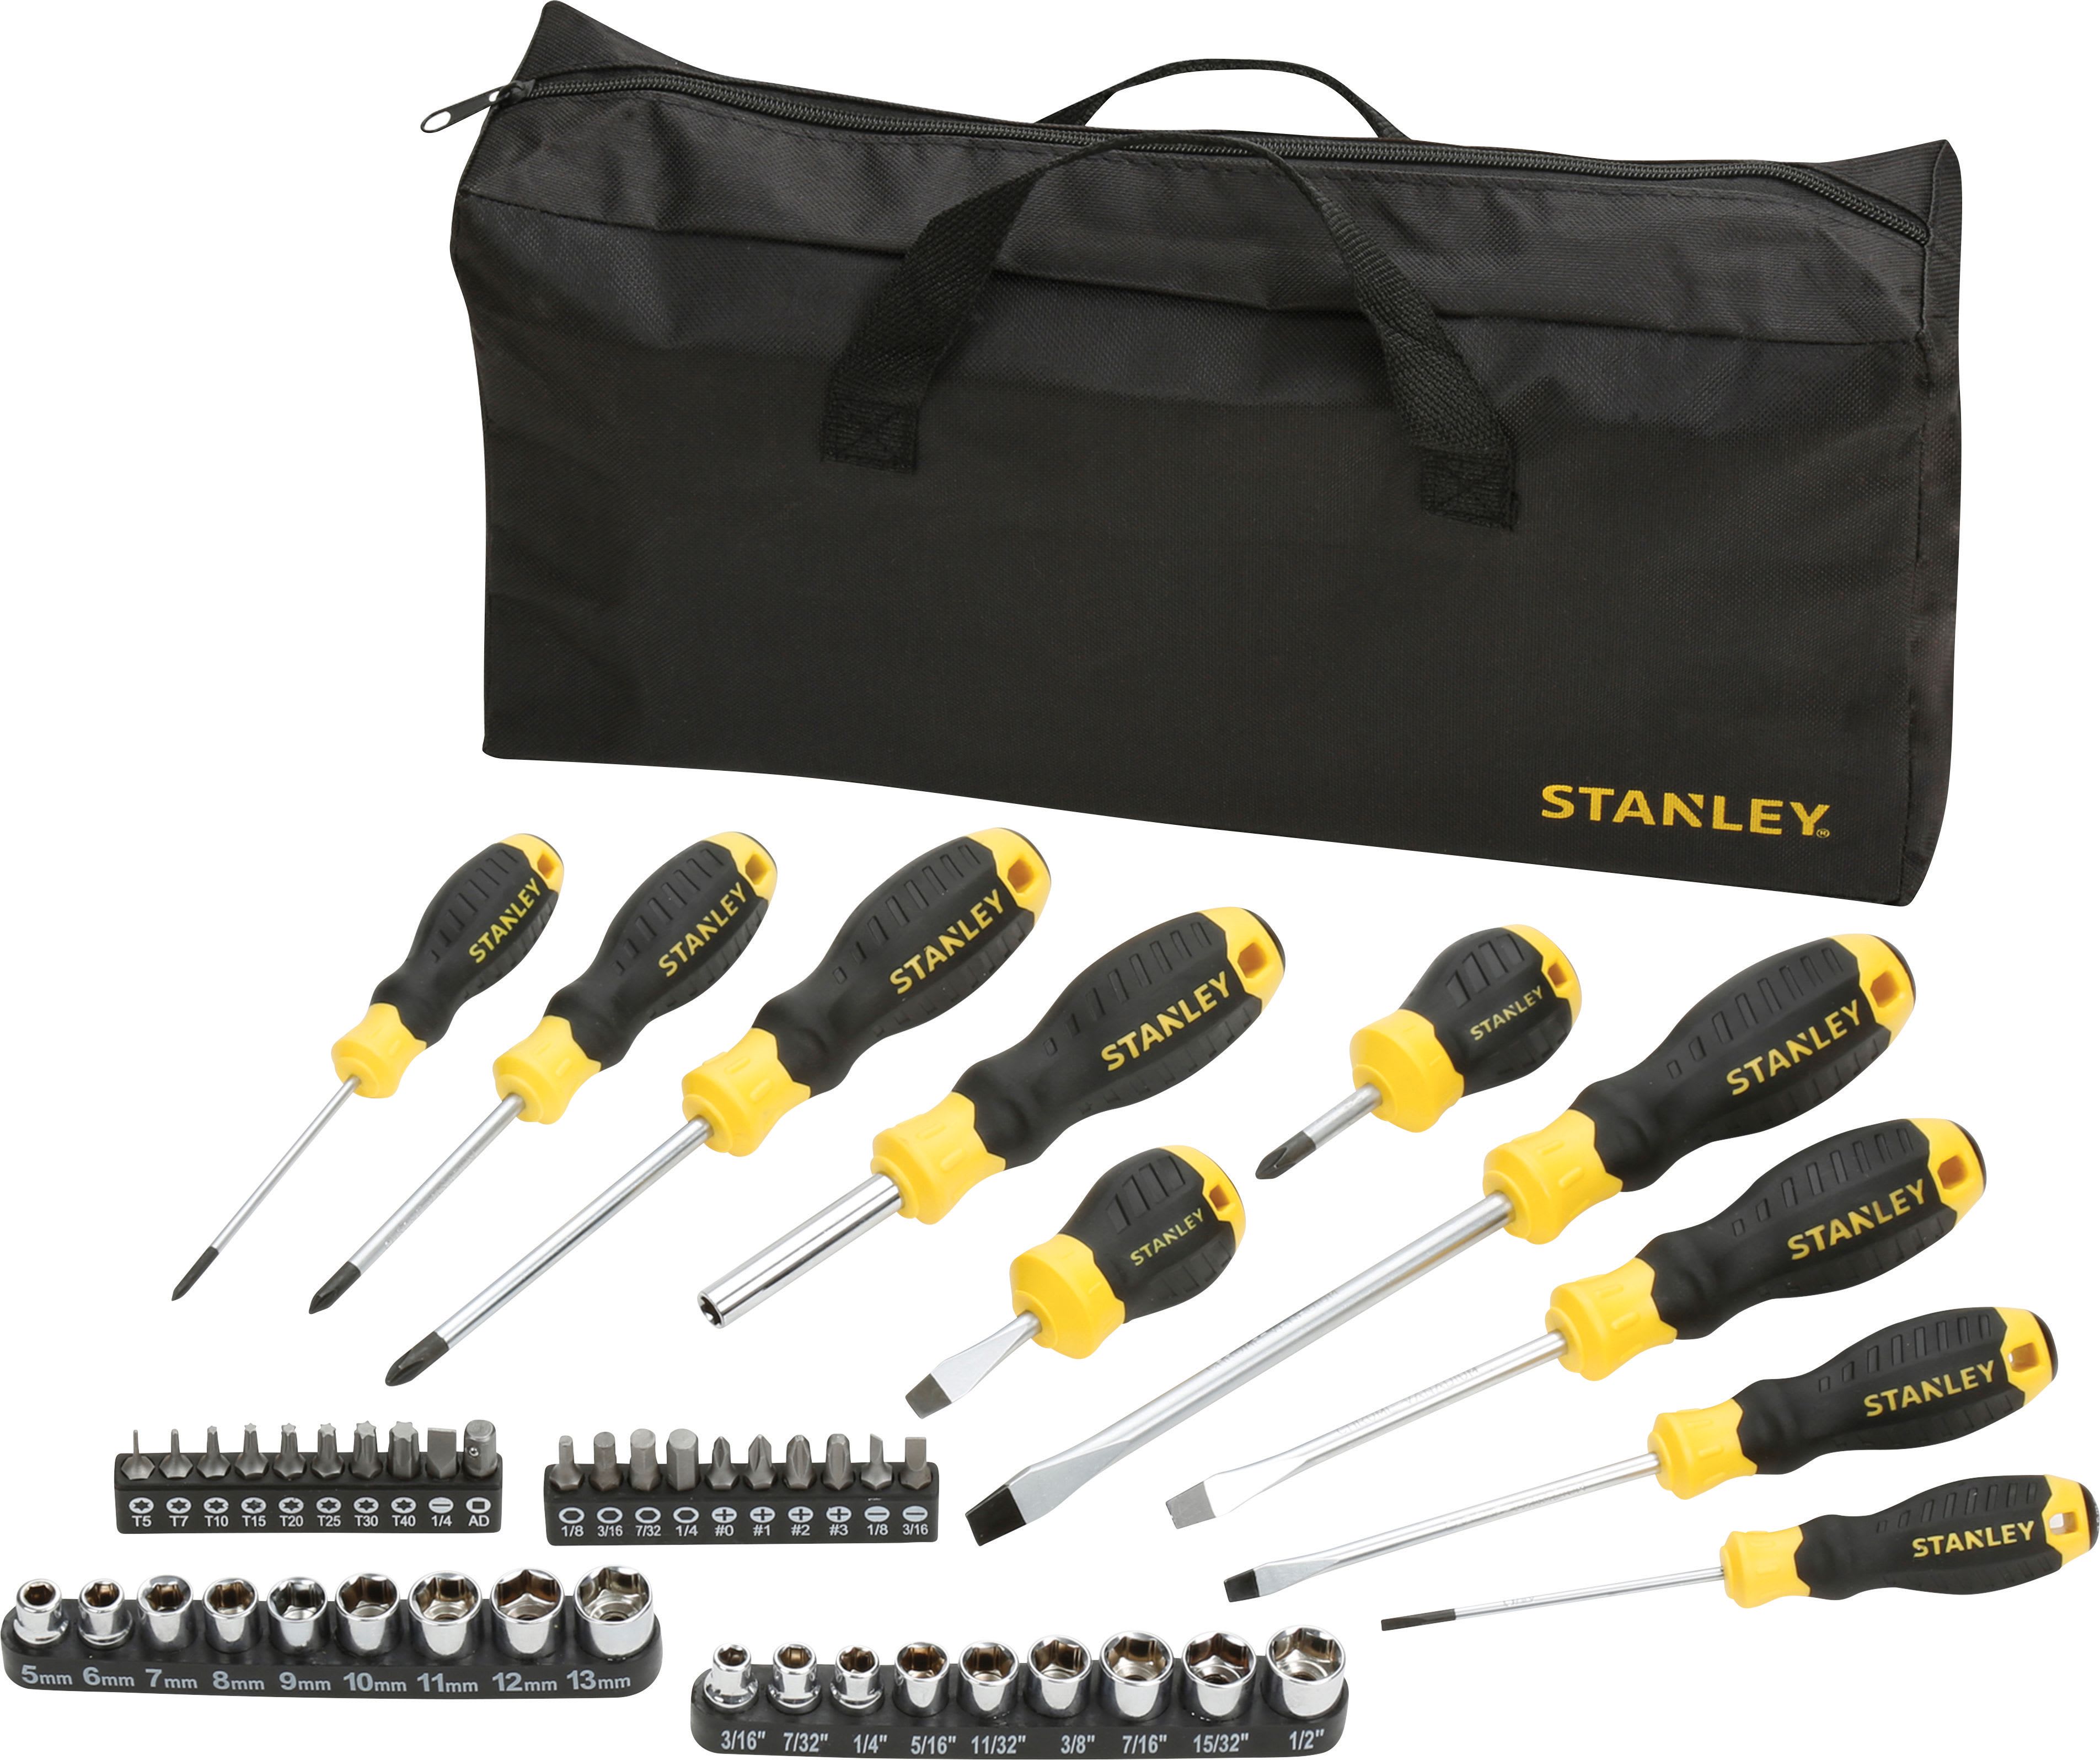 Stanley 48 Piece Screwdriver Set with Bag